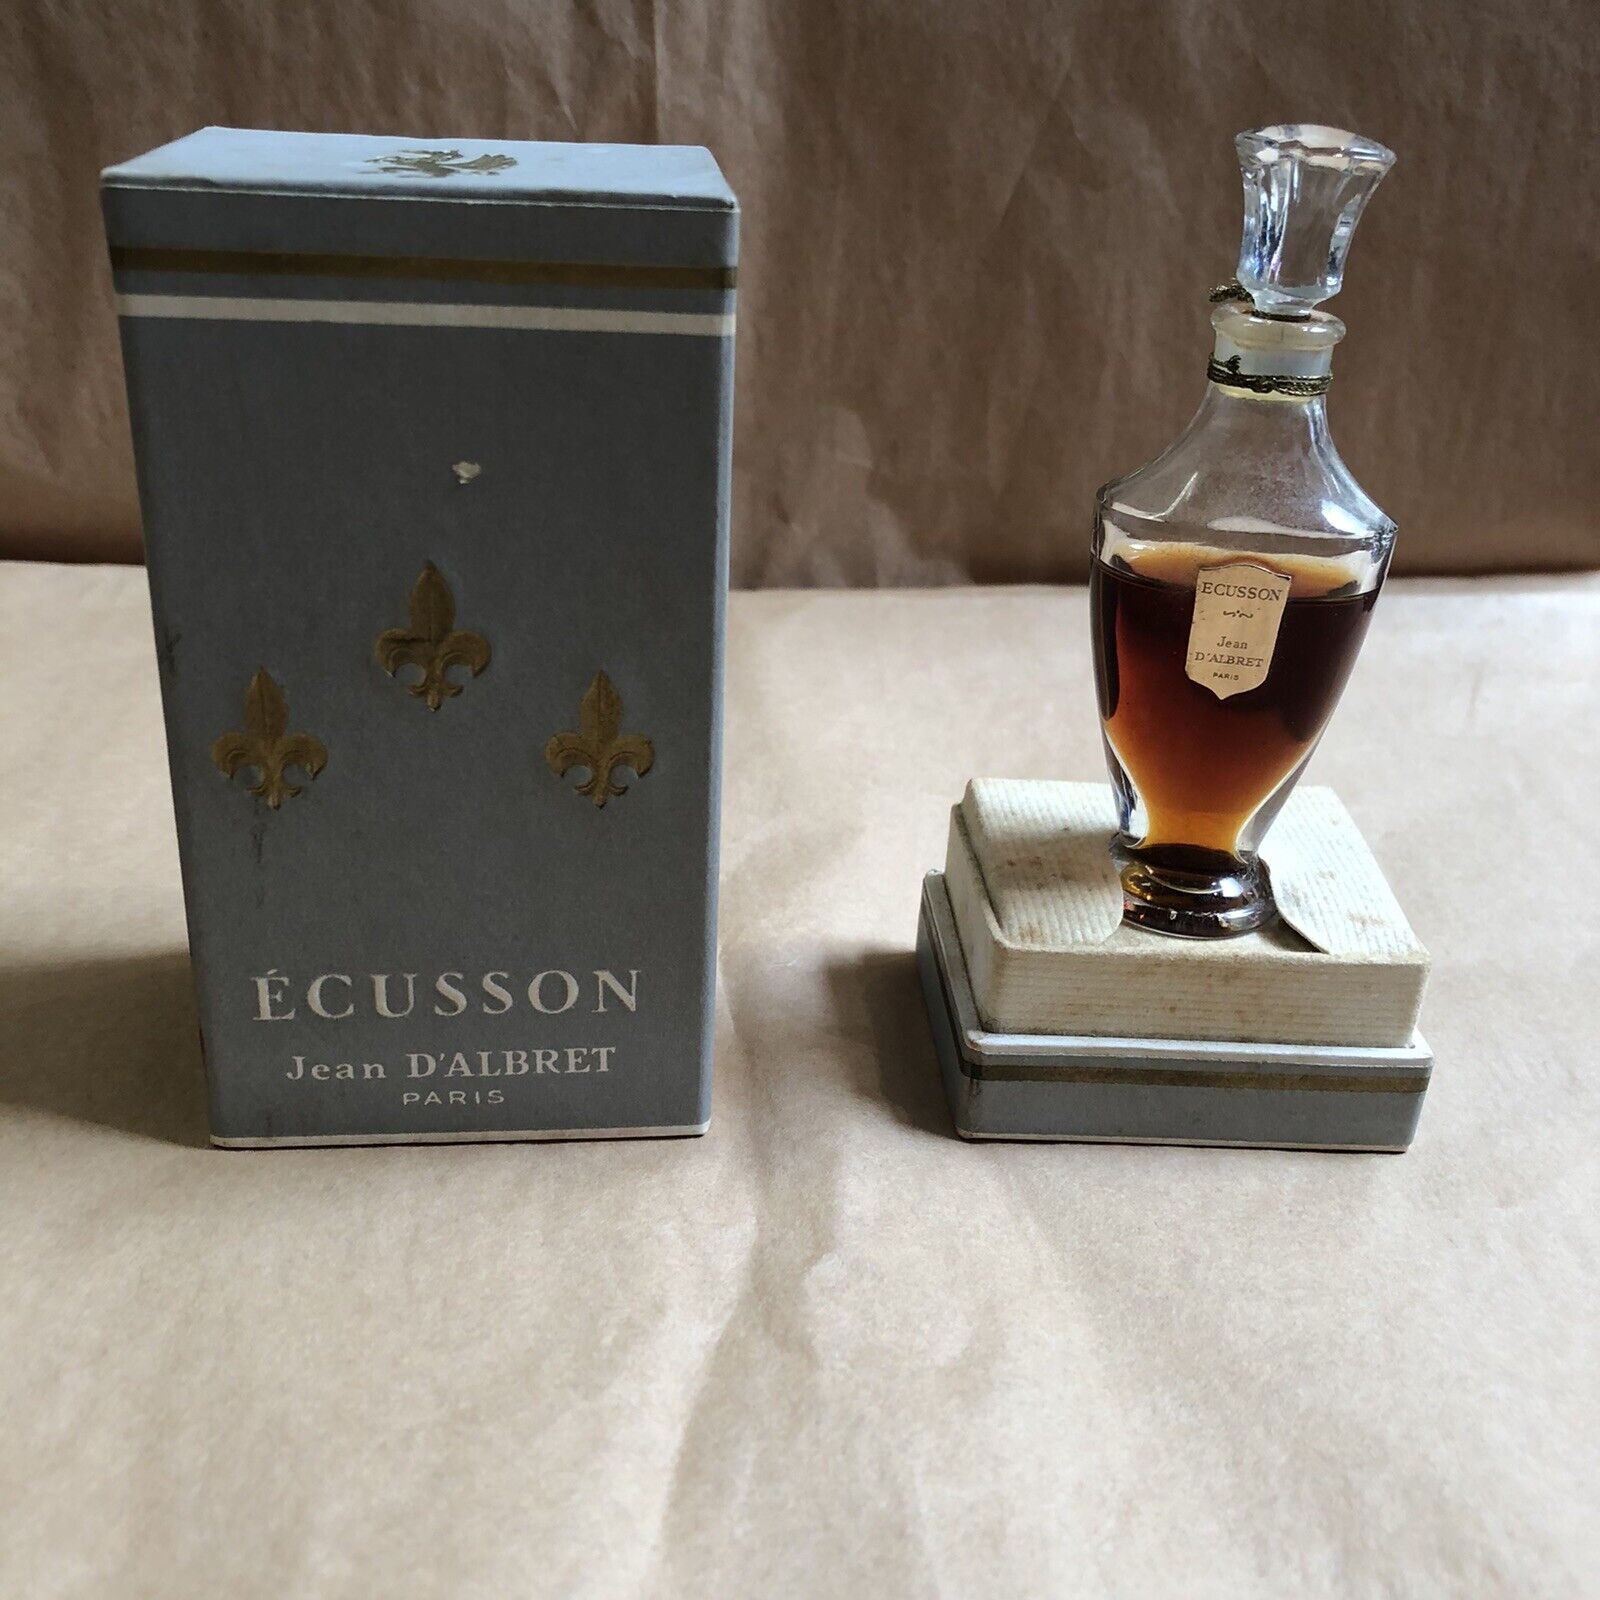 Vintage Jean D’albert Ecusson Perfume